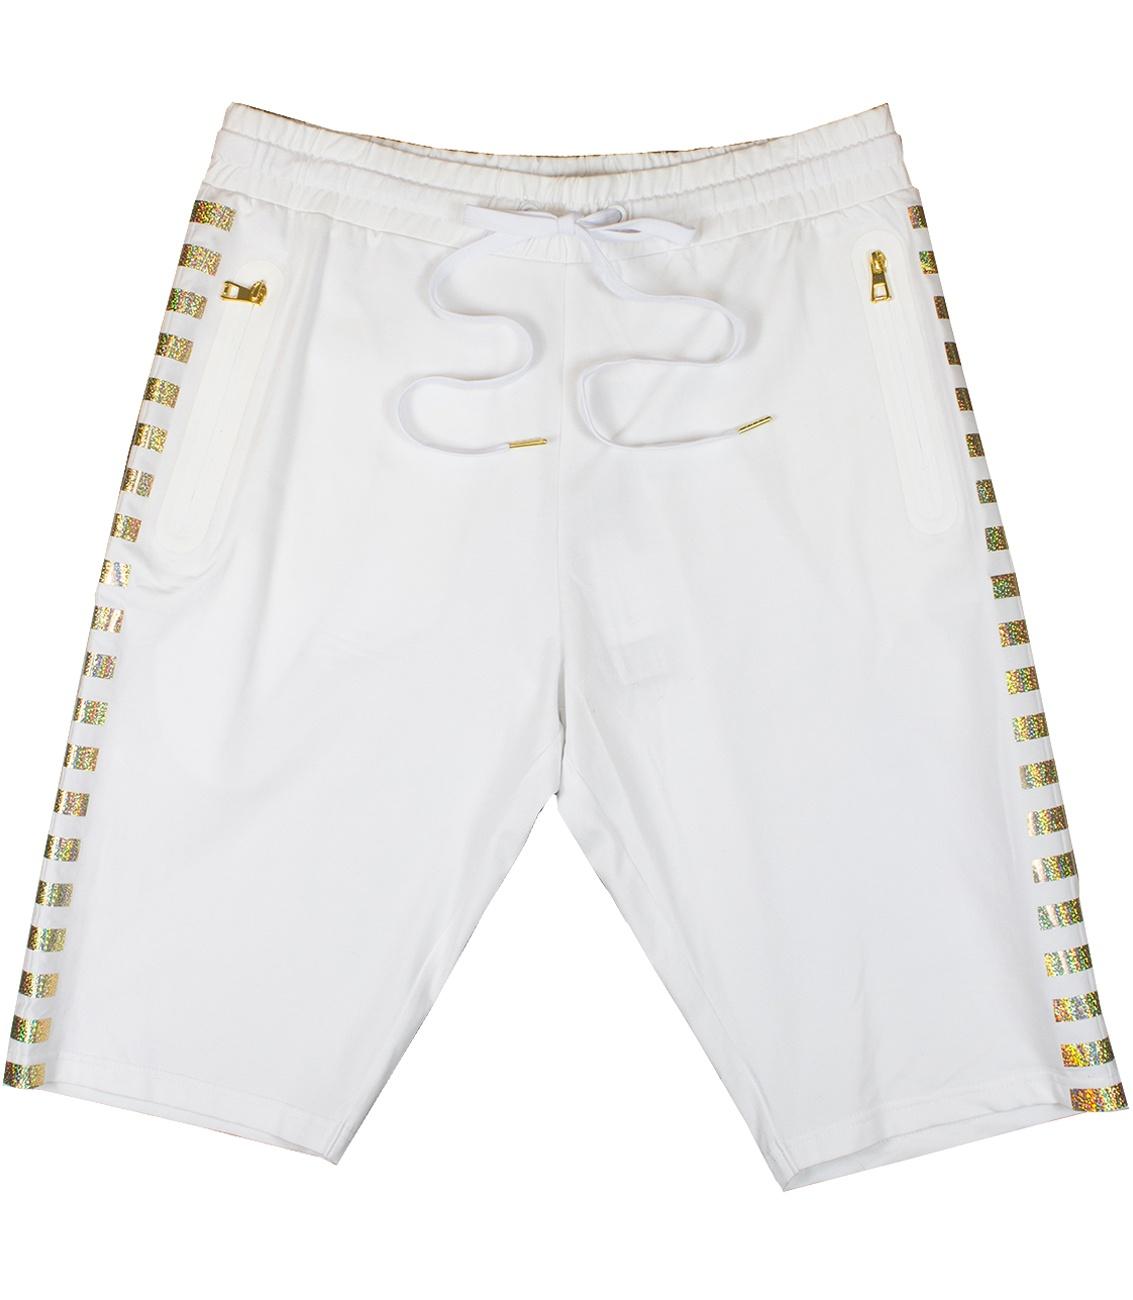 M718 Fetti Fiend Jersey Shorts - White/Gold